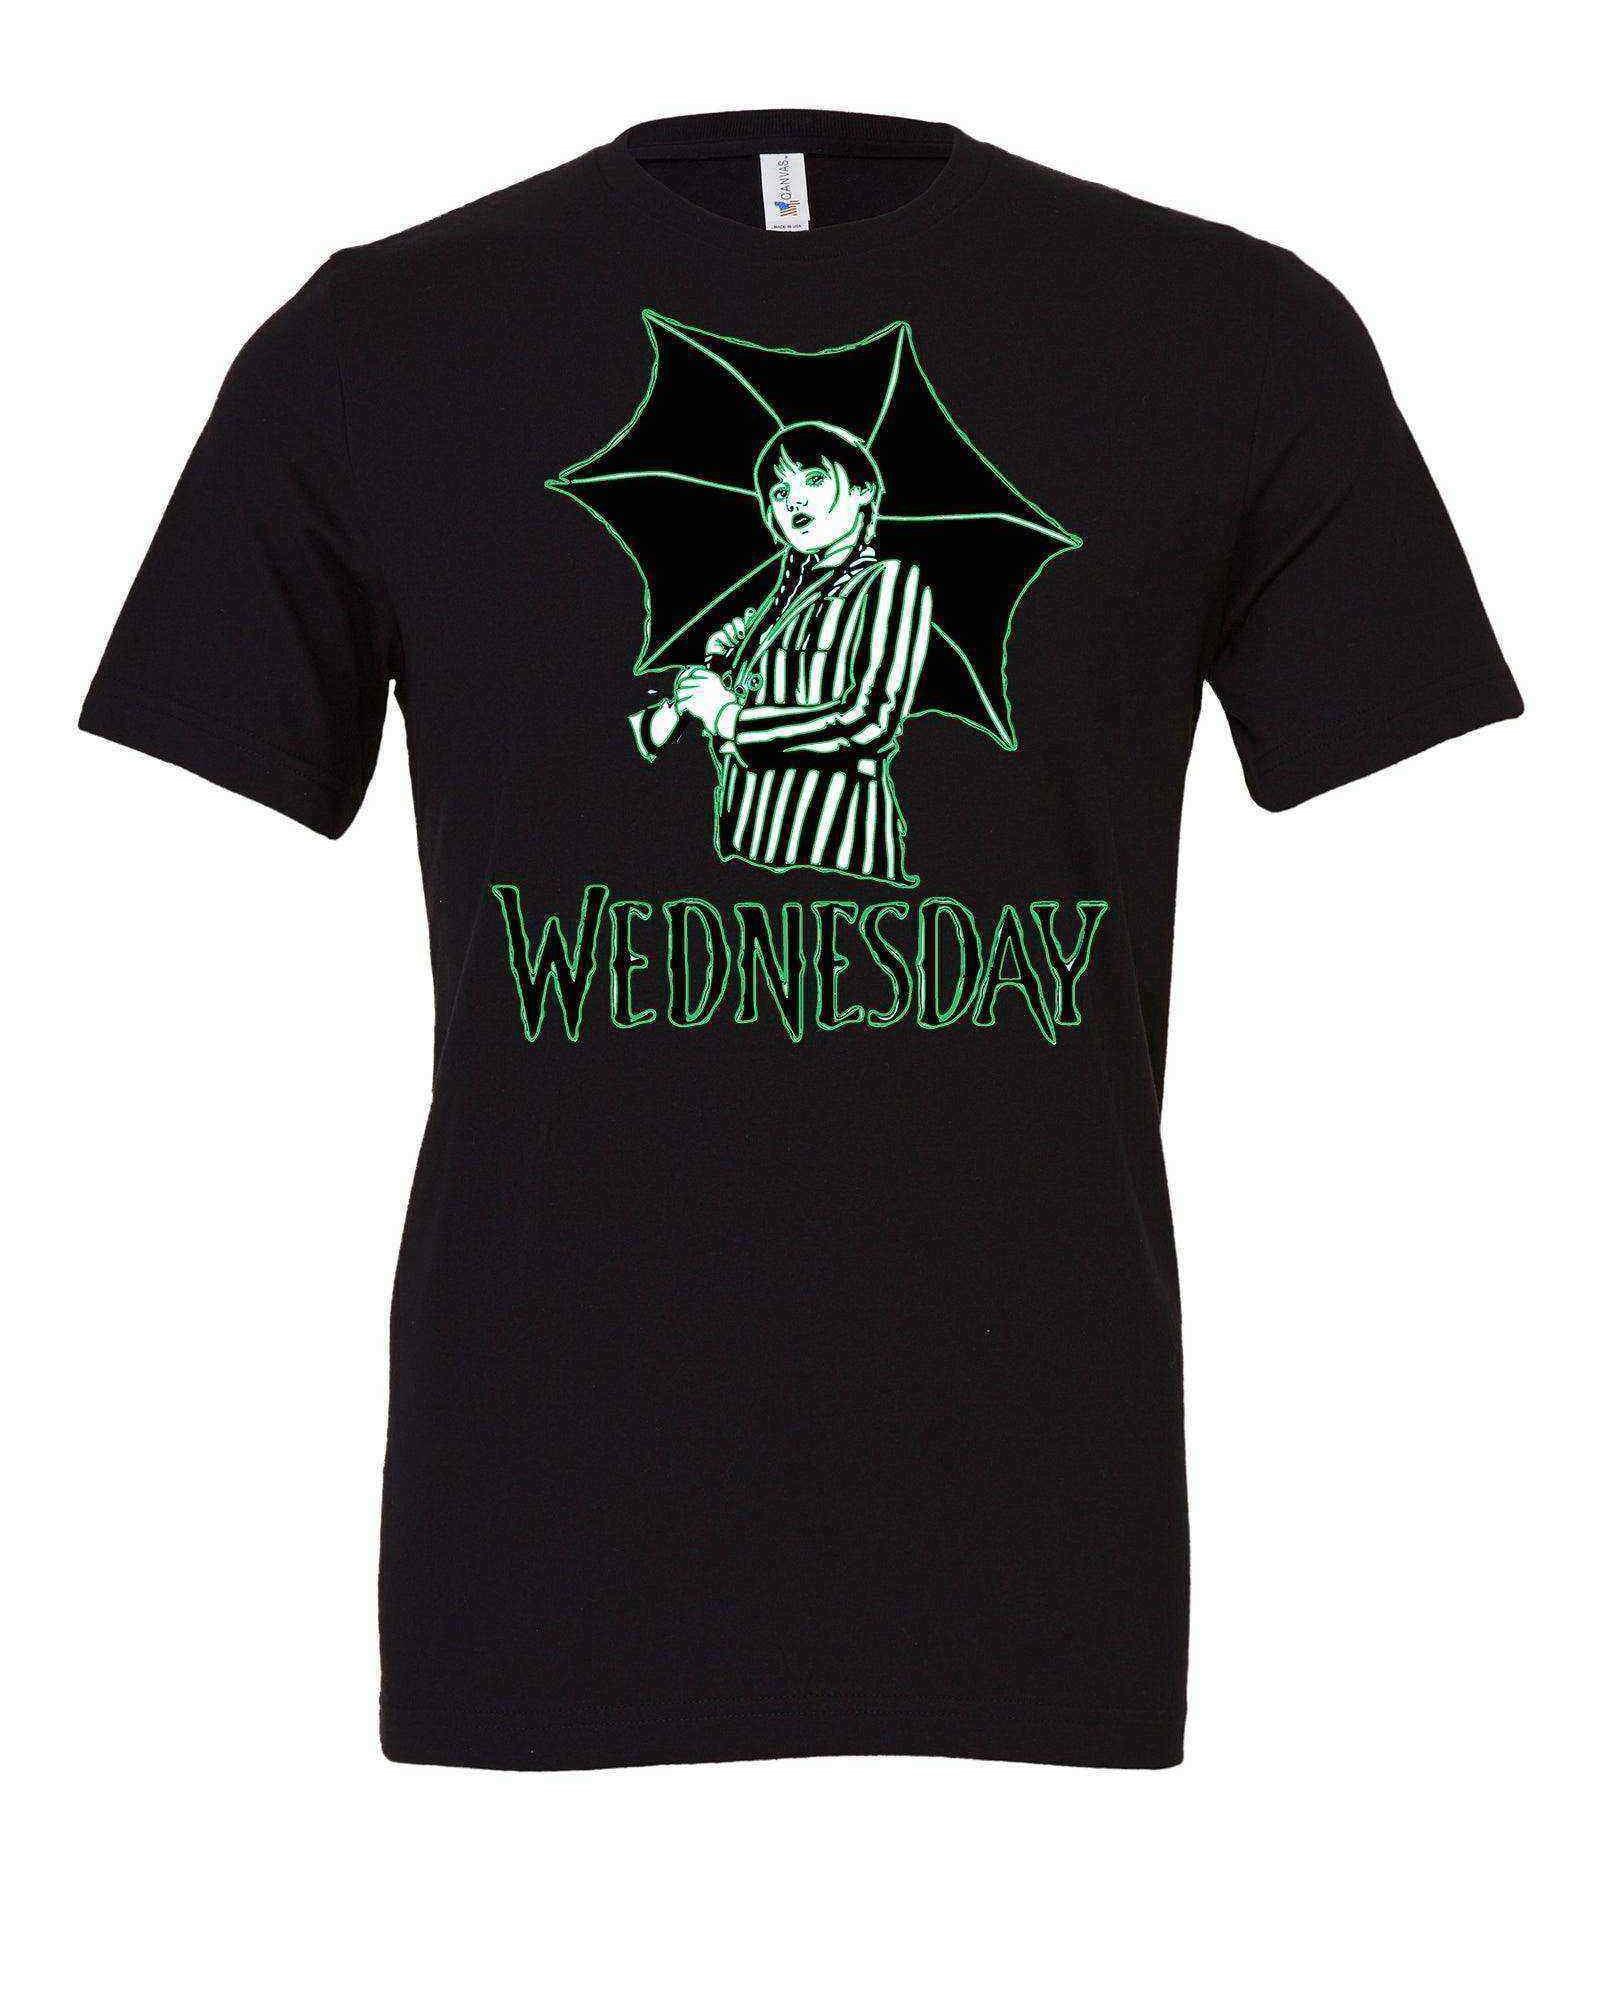 Umbrella Wednesday Shirt | Wednesday Shirt - Dylan's Tees